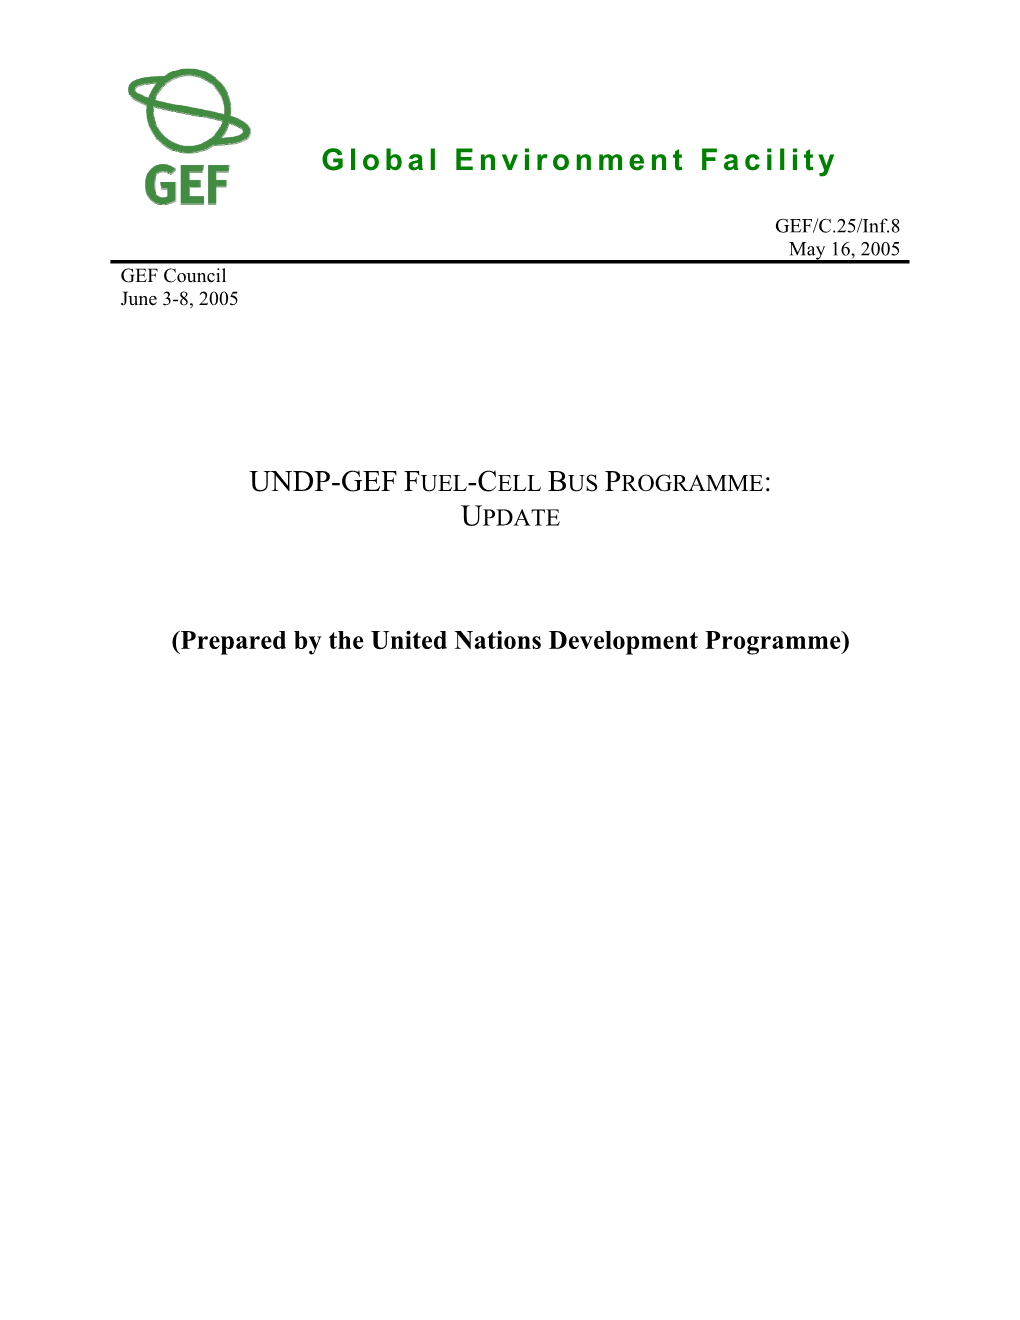 Undp-Gef Fuel-Cell Bus Programme: Update